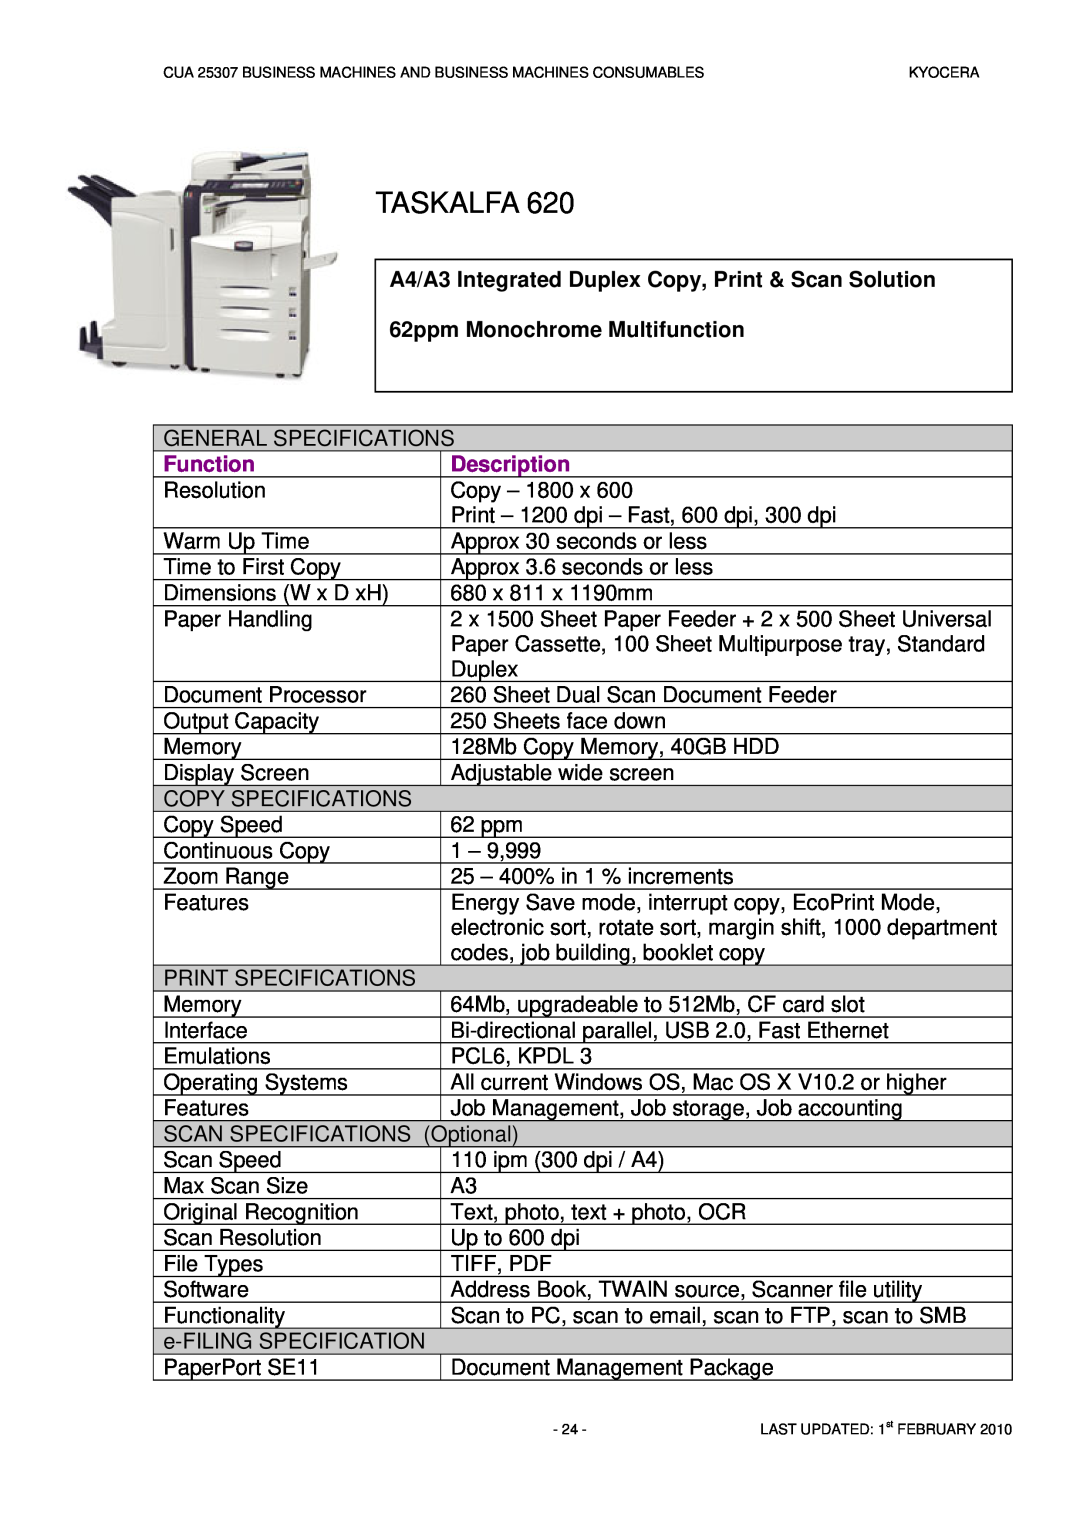 Kyocera CUA 25307 manual 62ppm Monochrome Multifunction, Taskalfa, Function, Description 